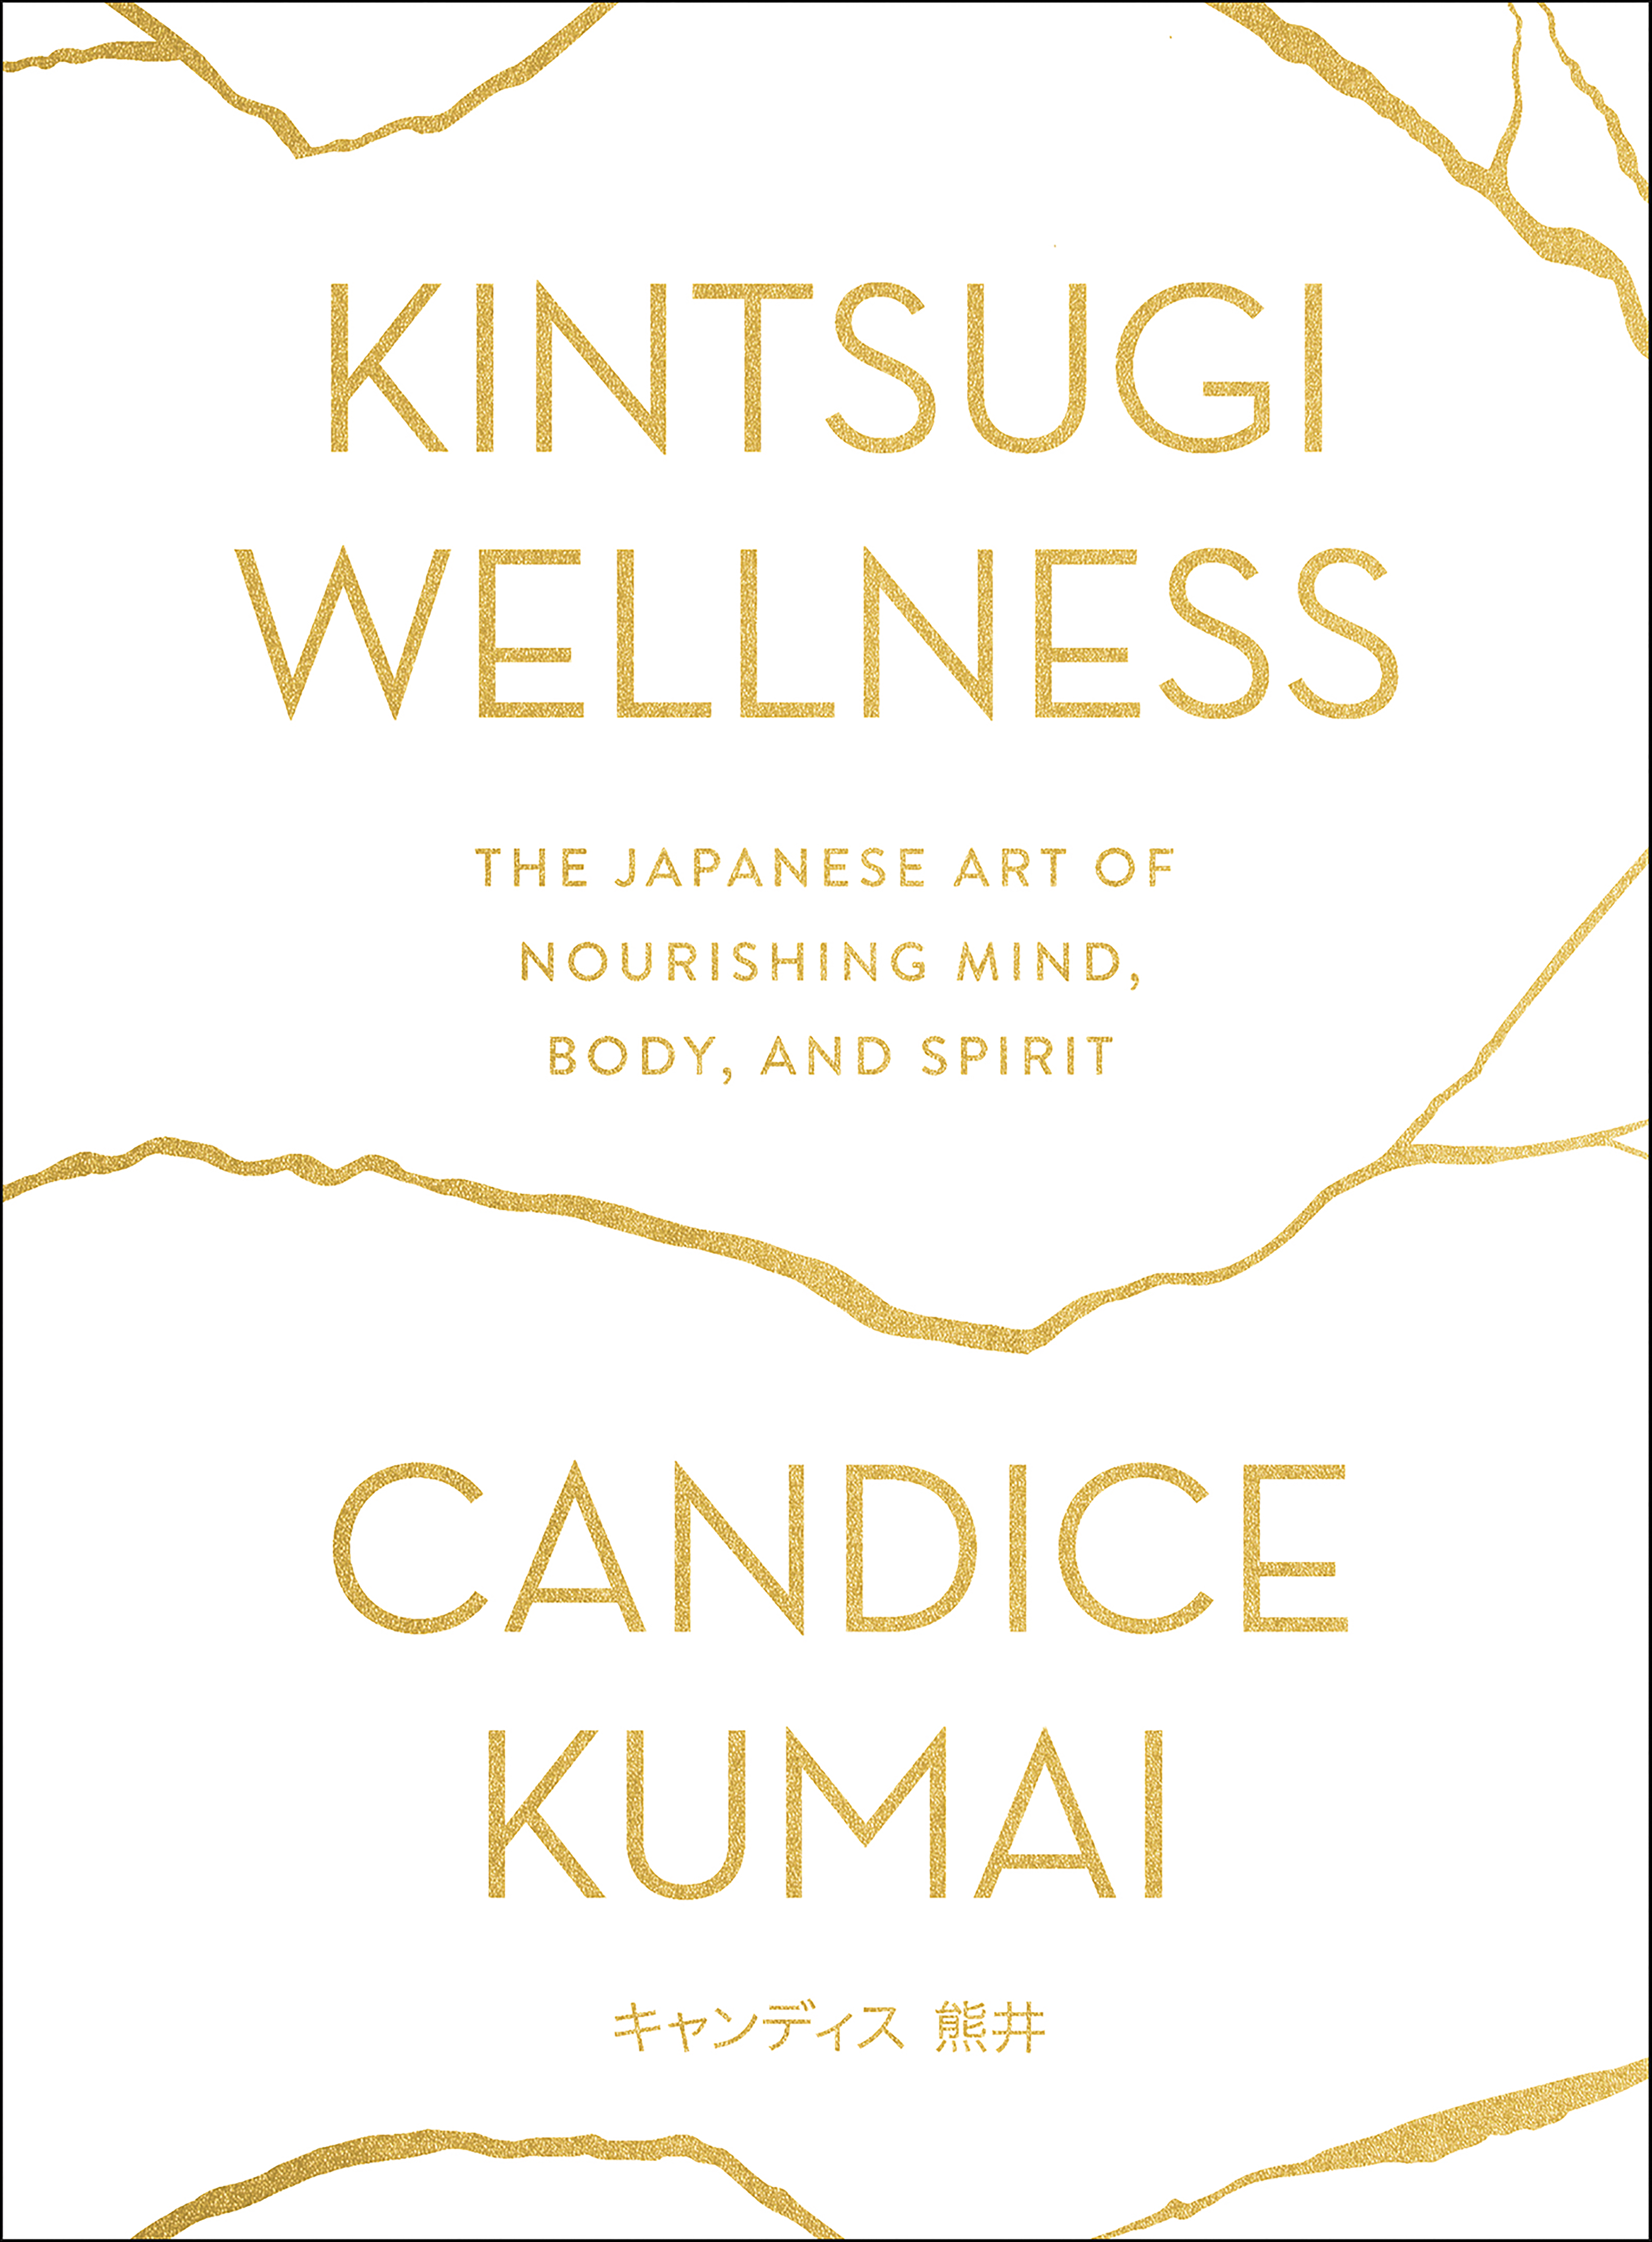 Kintsugi wellness the Japanese art of nourishing mind, body, and spirit cover image